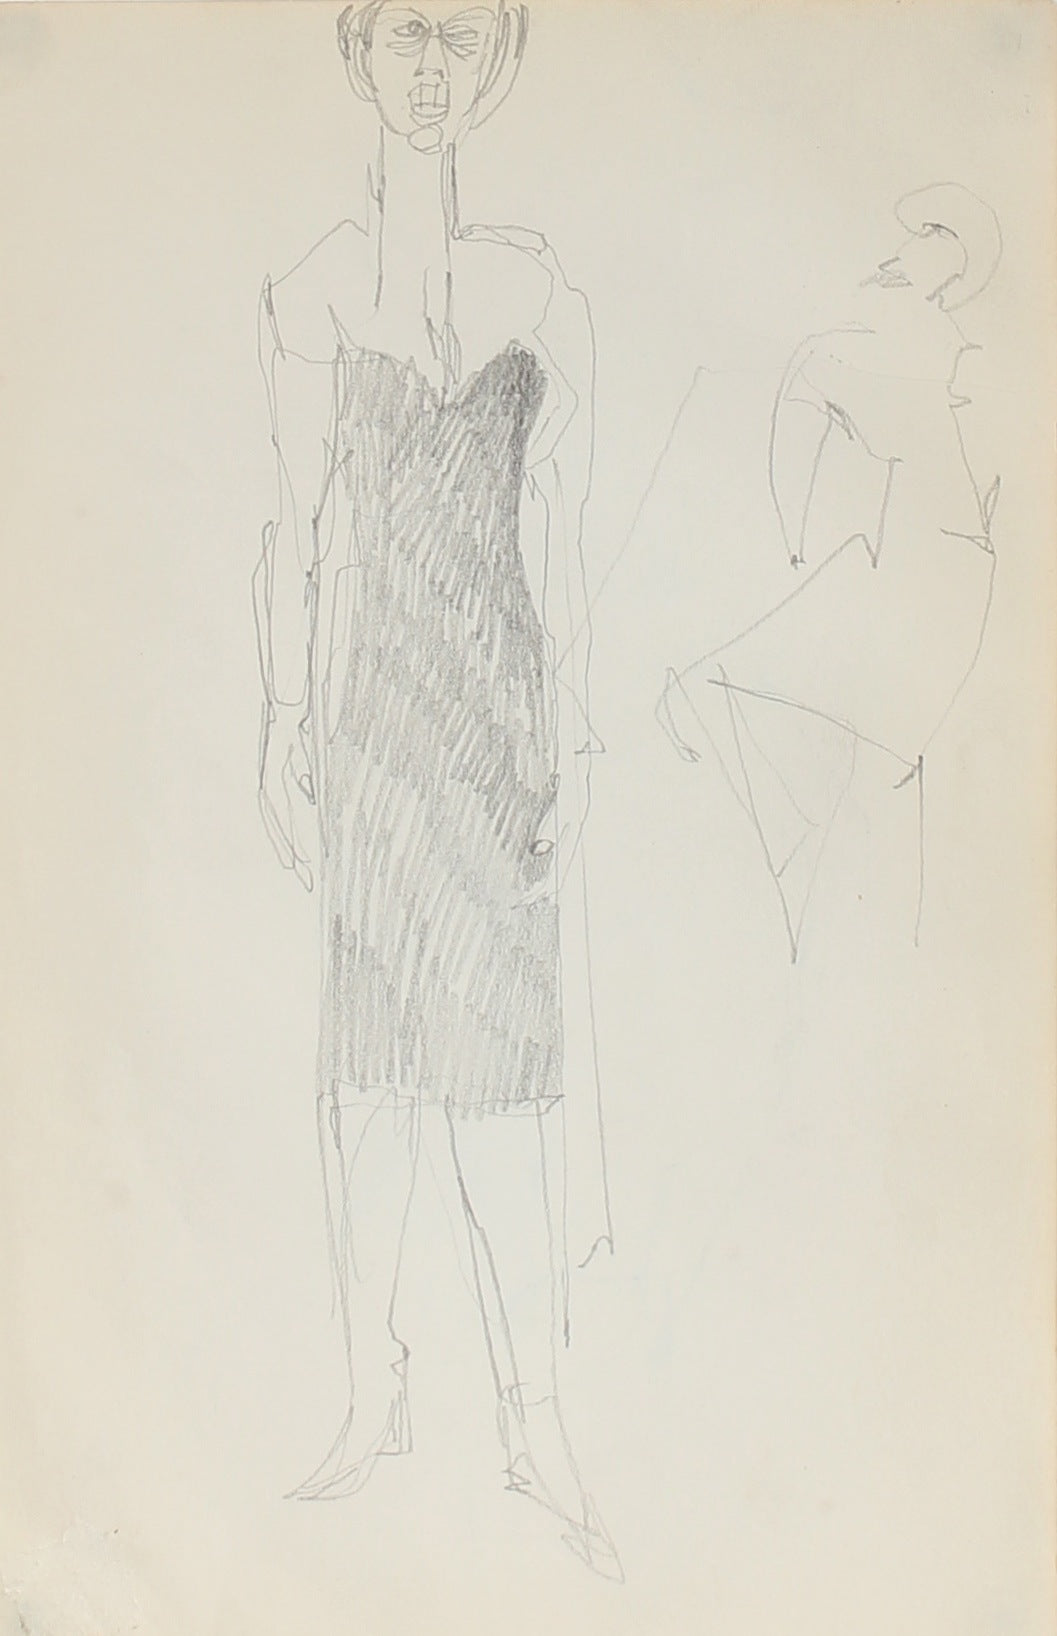 Woman in Black, New York<br><br>Graphite, 1950-60s<br><br>#0311